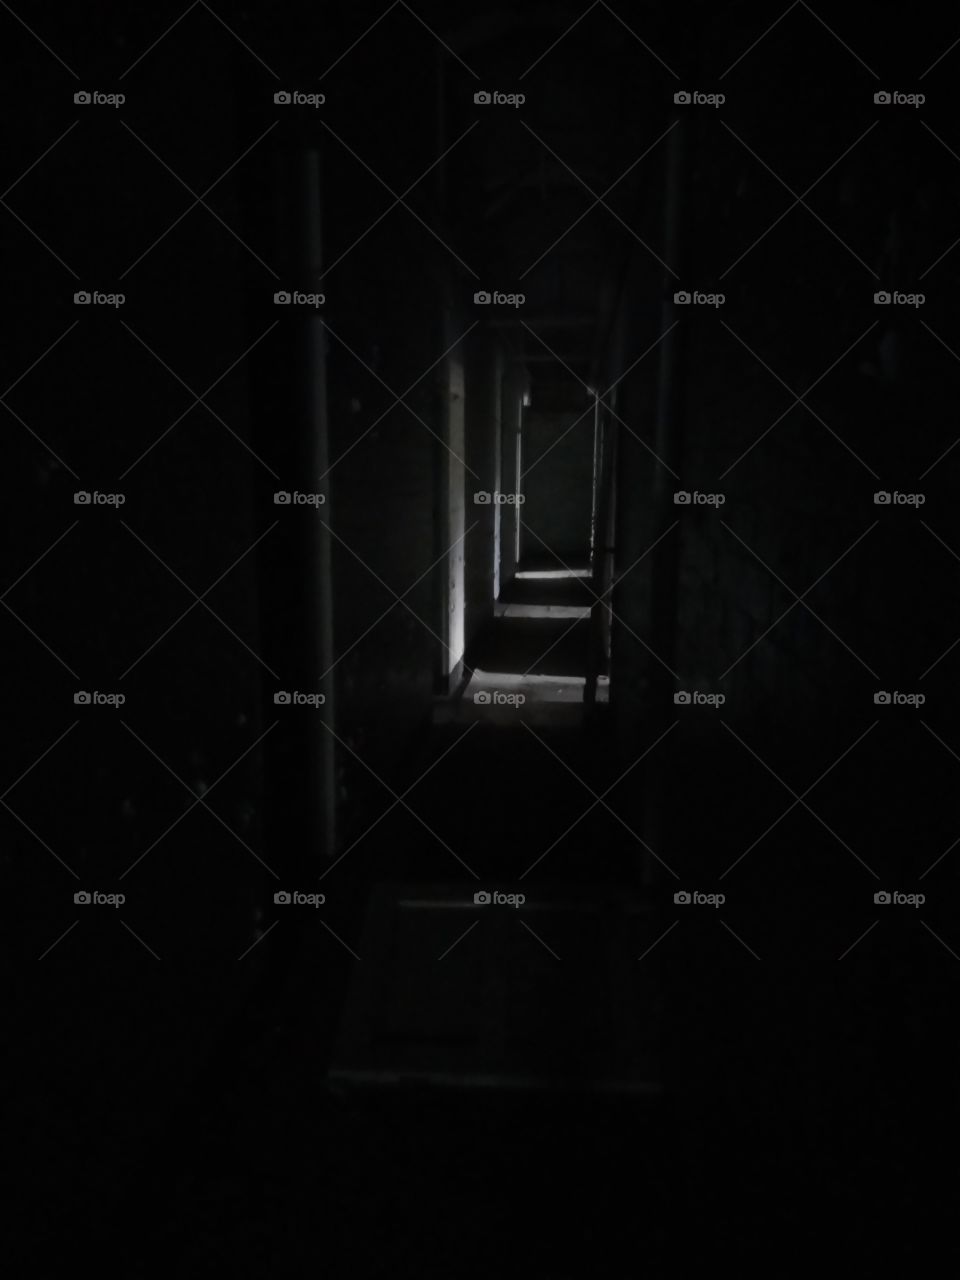 Spooky dark light hallway